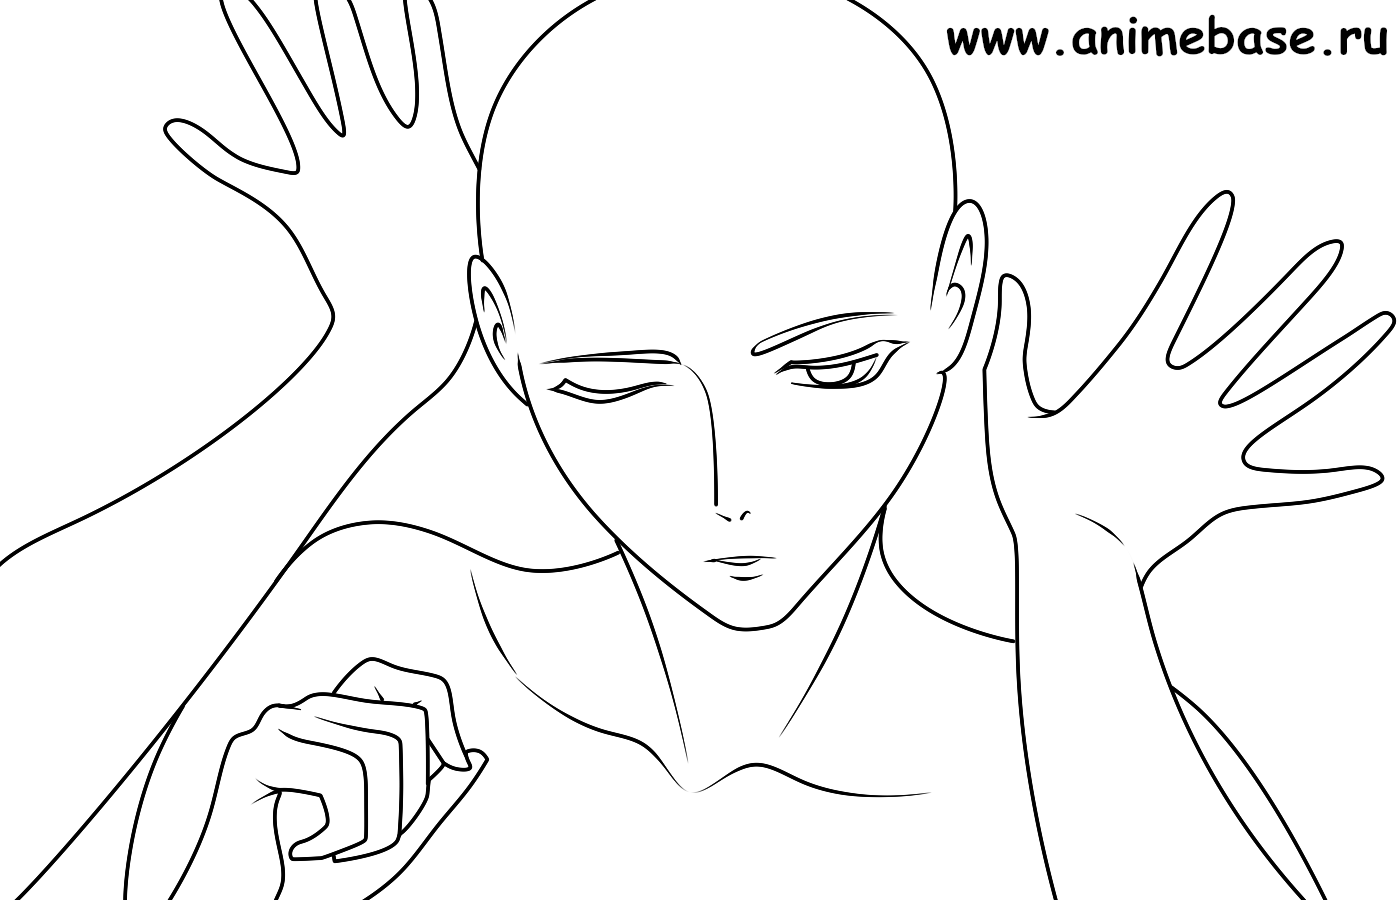 How to draw Anime Boy Head - Beginner Tutorial - YouTube